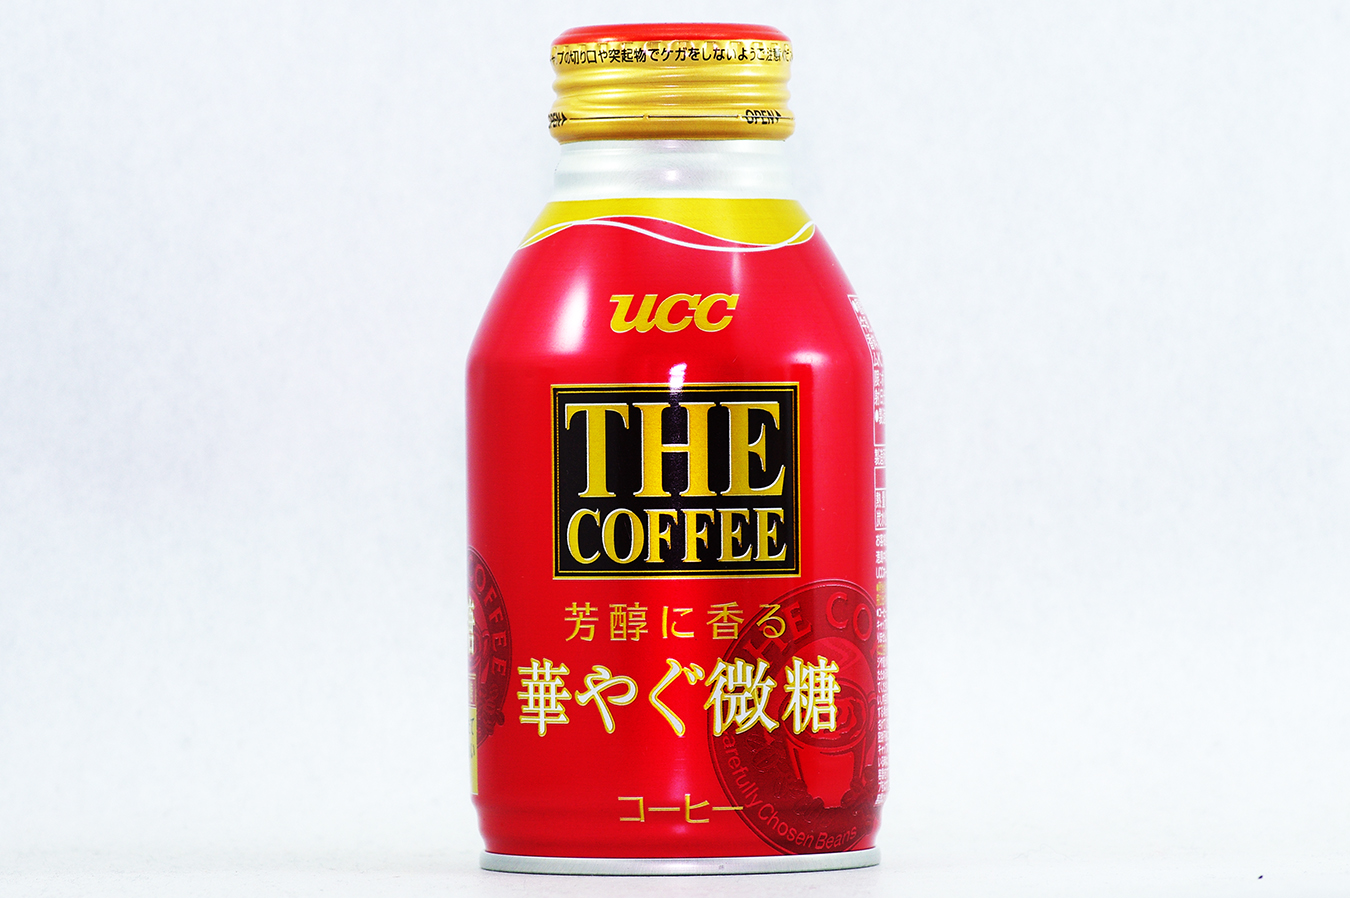 UCC THE COFFEE 華やぐ微糖 2017年9月